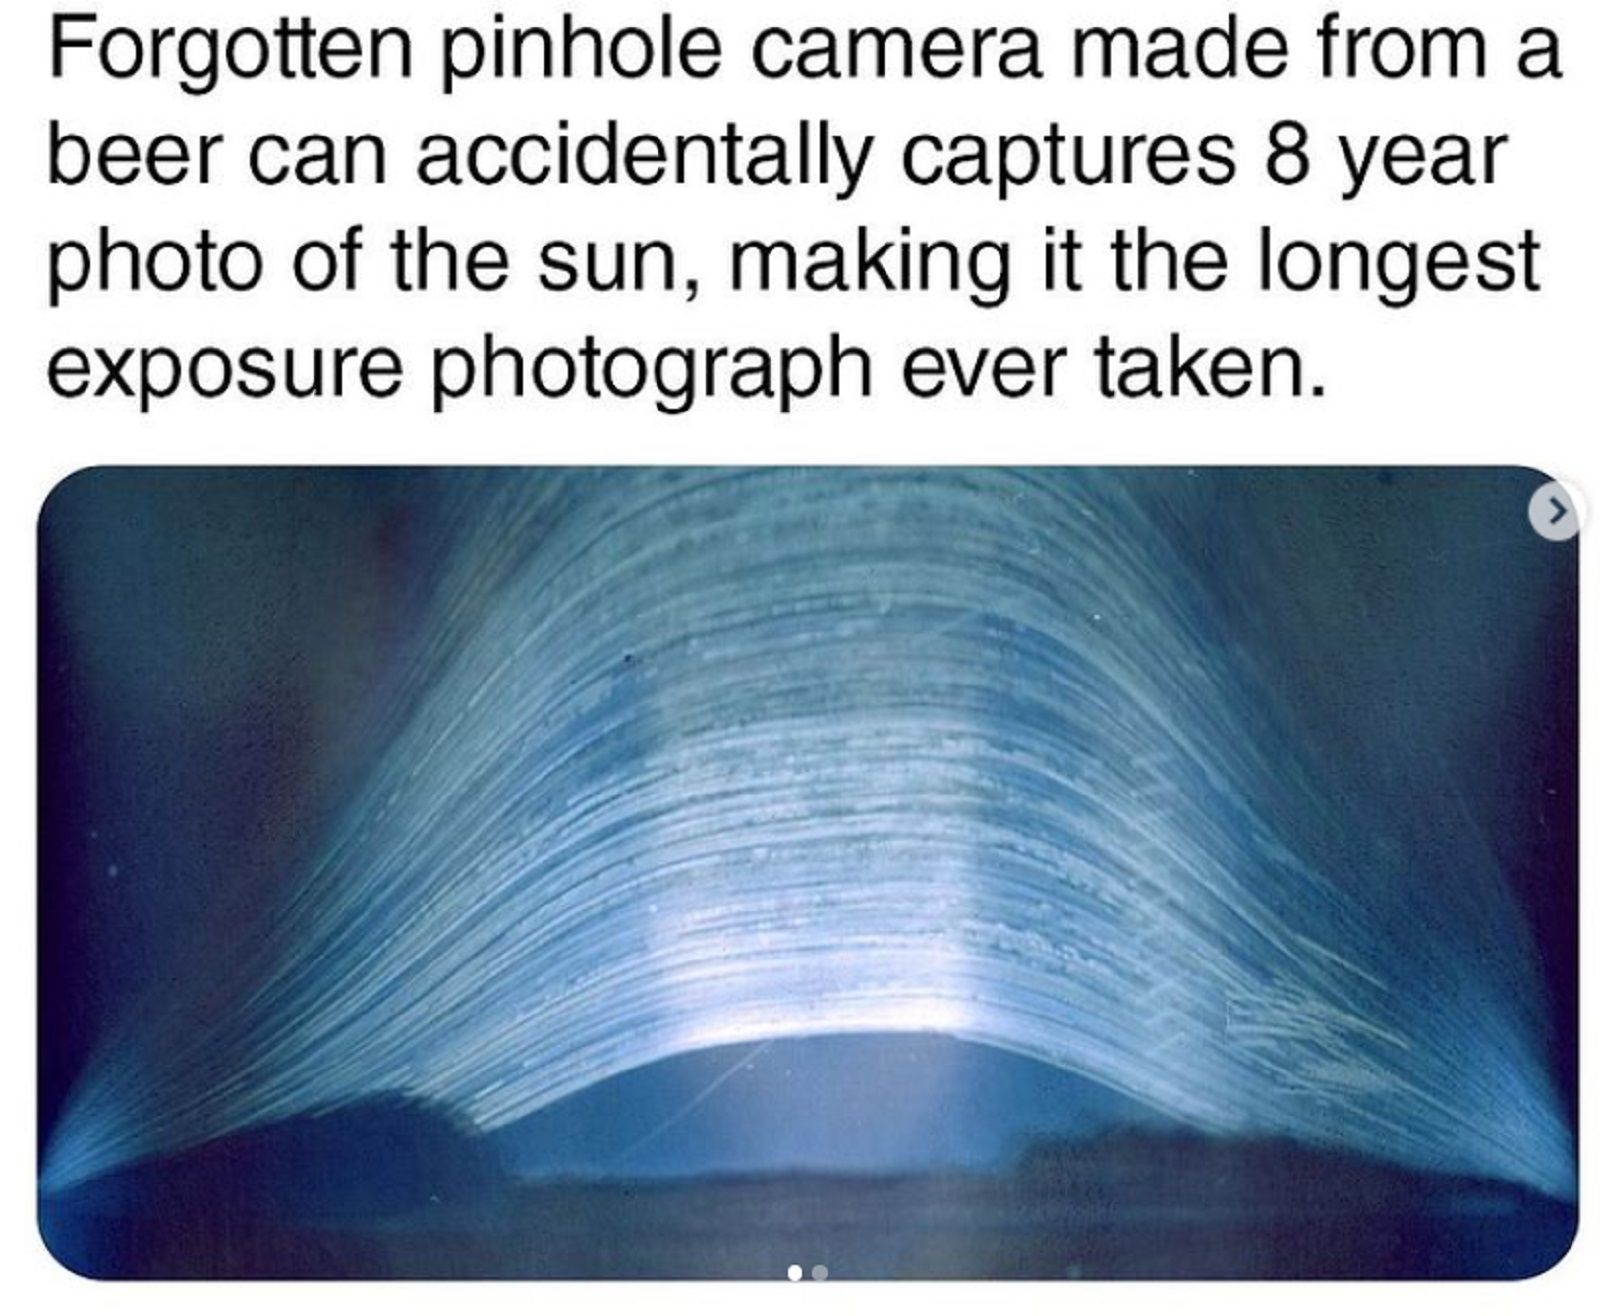 Pinehole camera